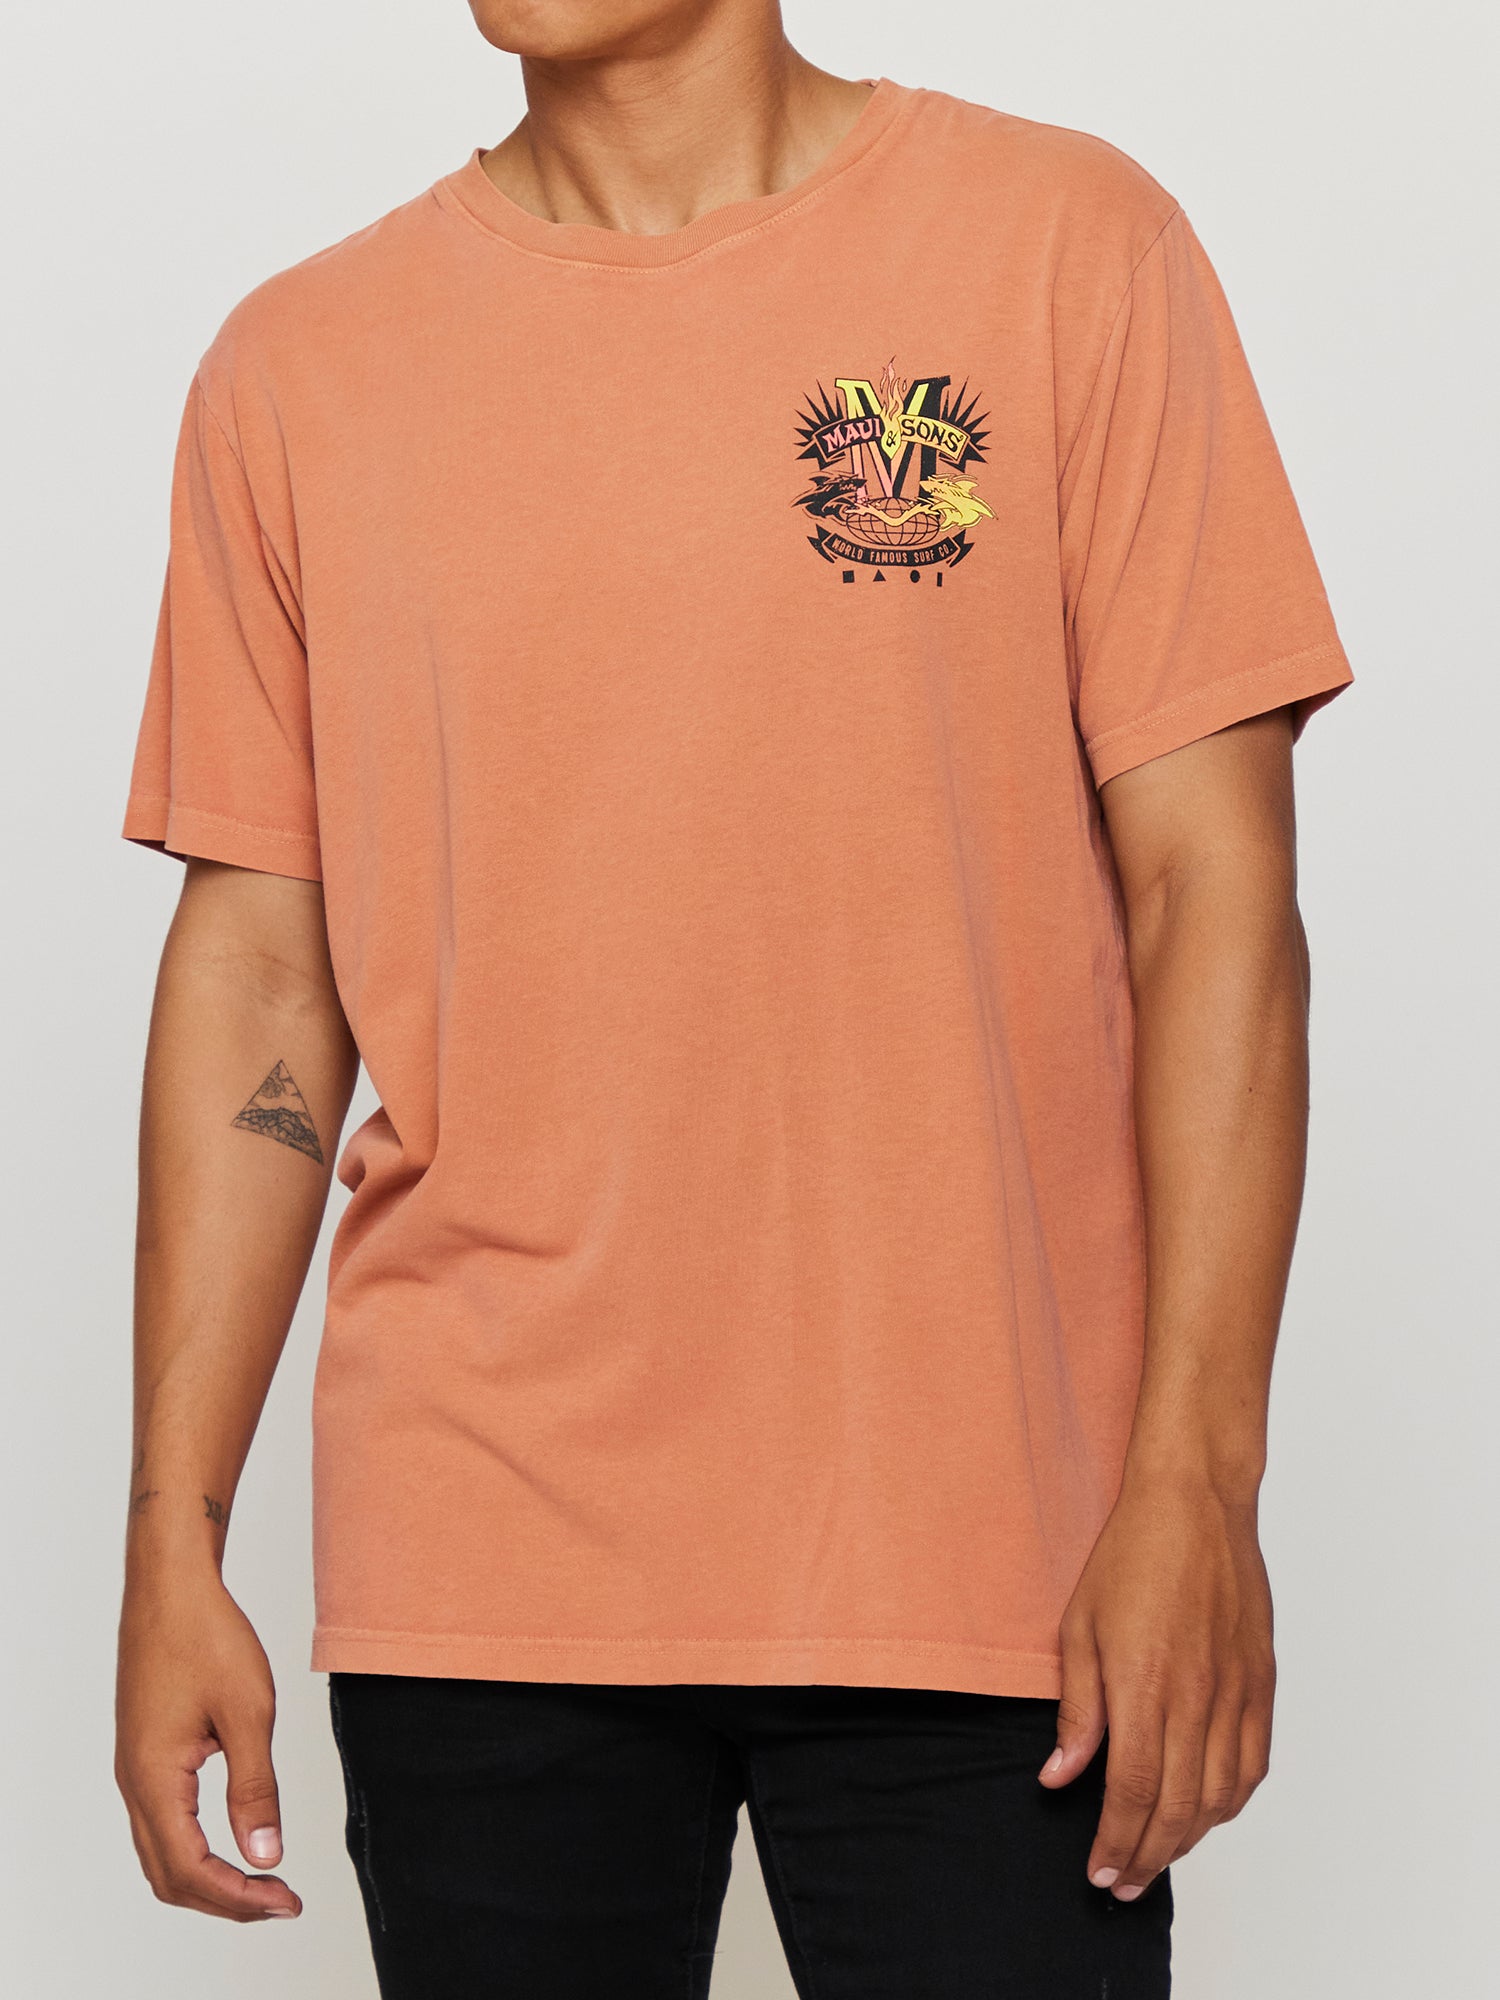 Big M T-Shirt | Maui and Sons